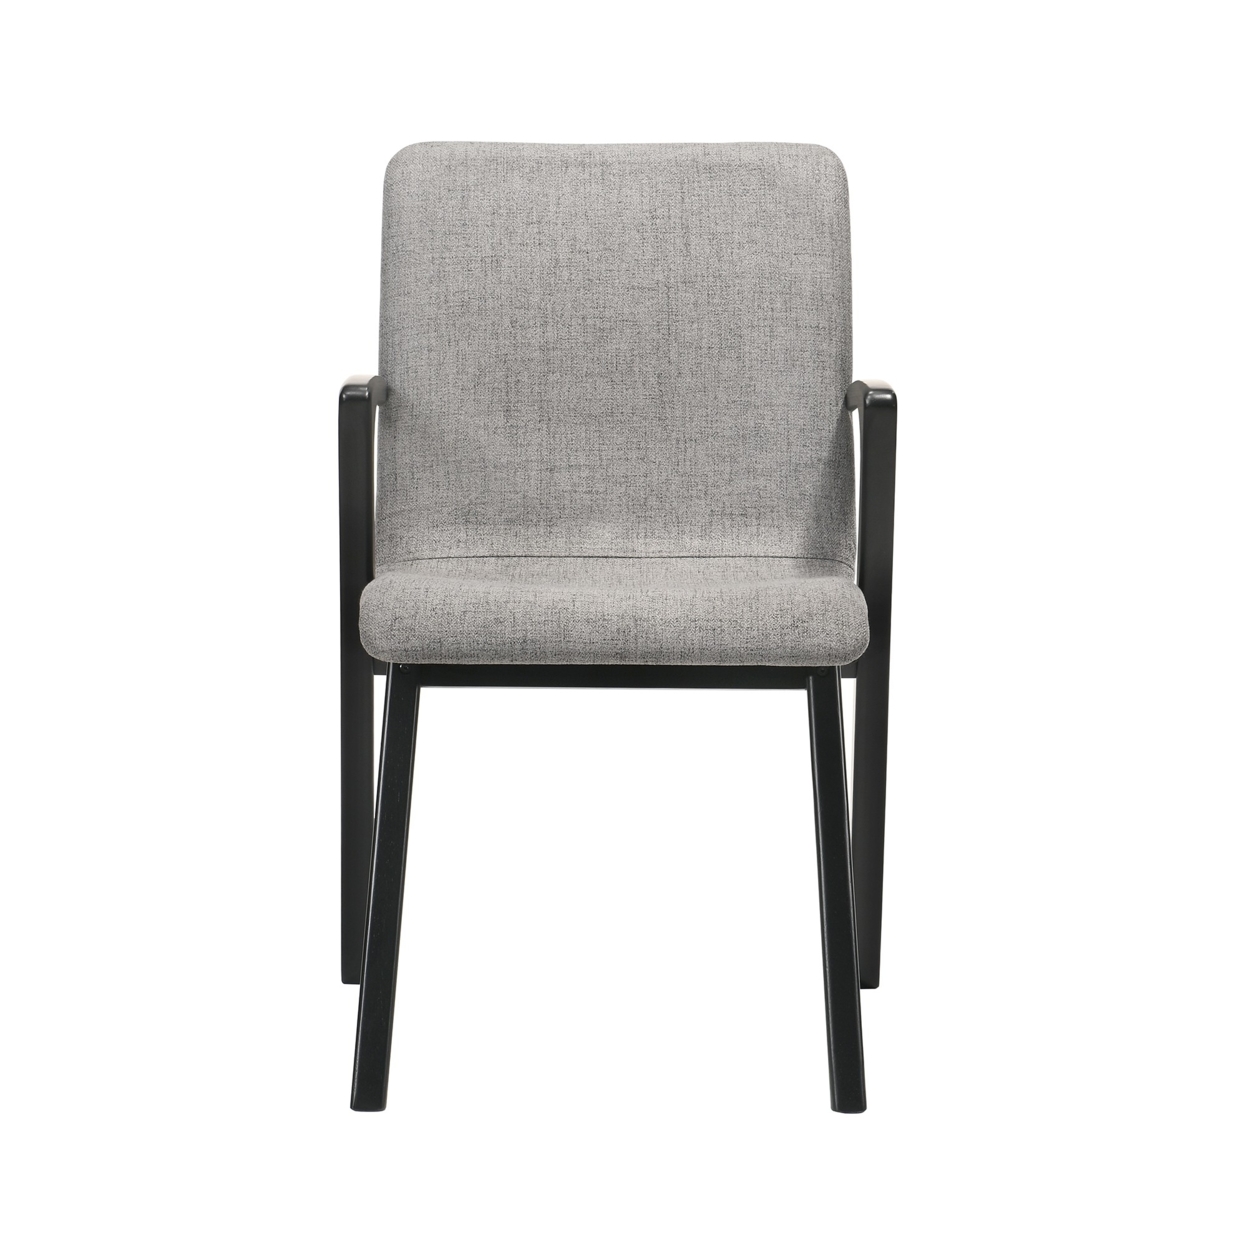 Mid Century Modern Fabric Upholstered Dining Chair, Set Of 2,Black And Gray- Saltoro Sherpi